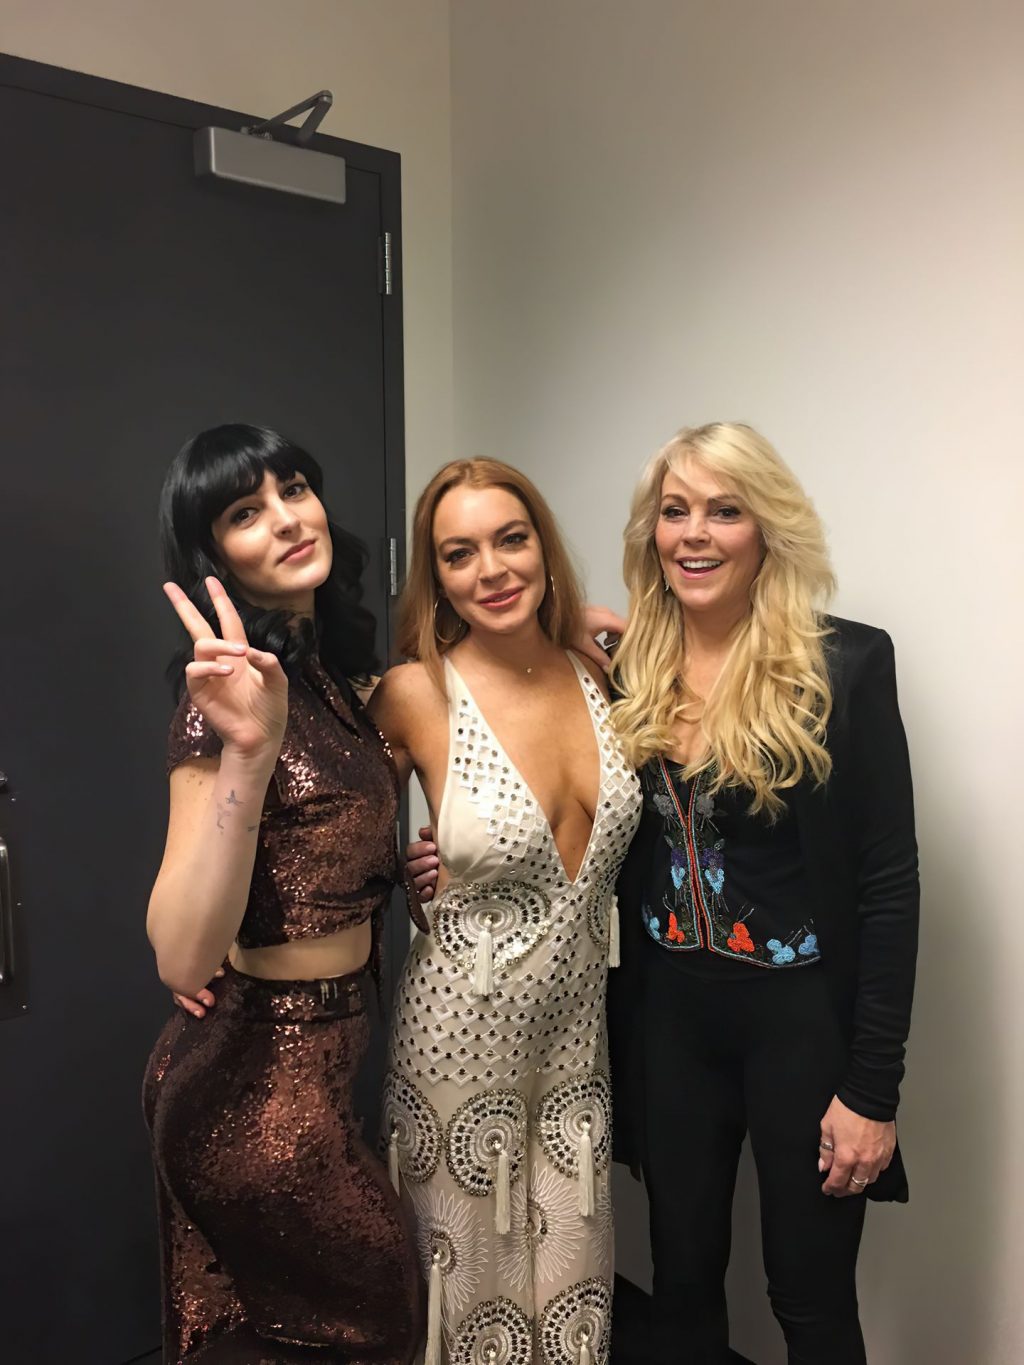 Lindsay Lohan Leaked Pics